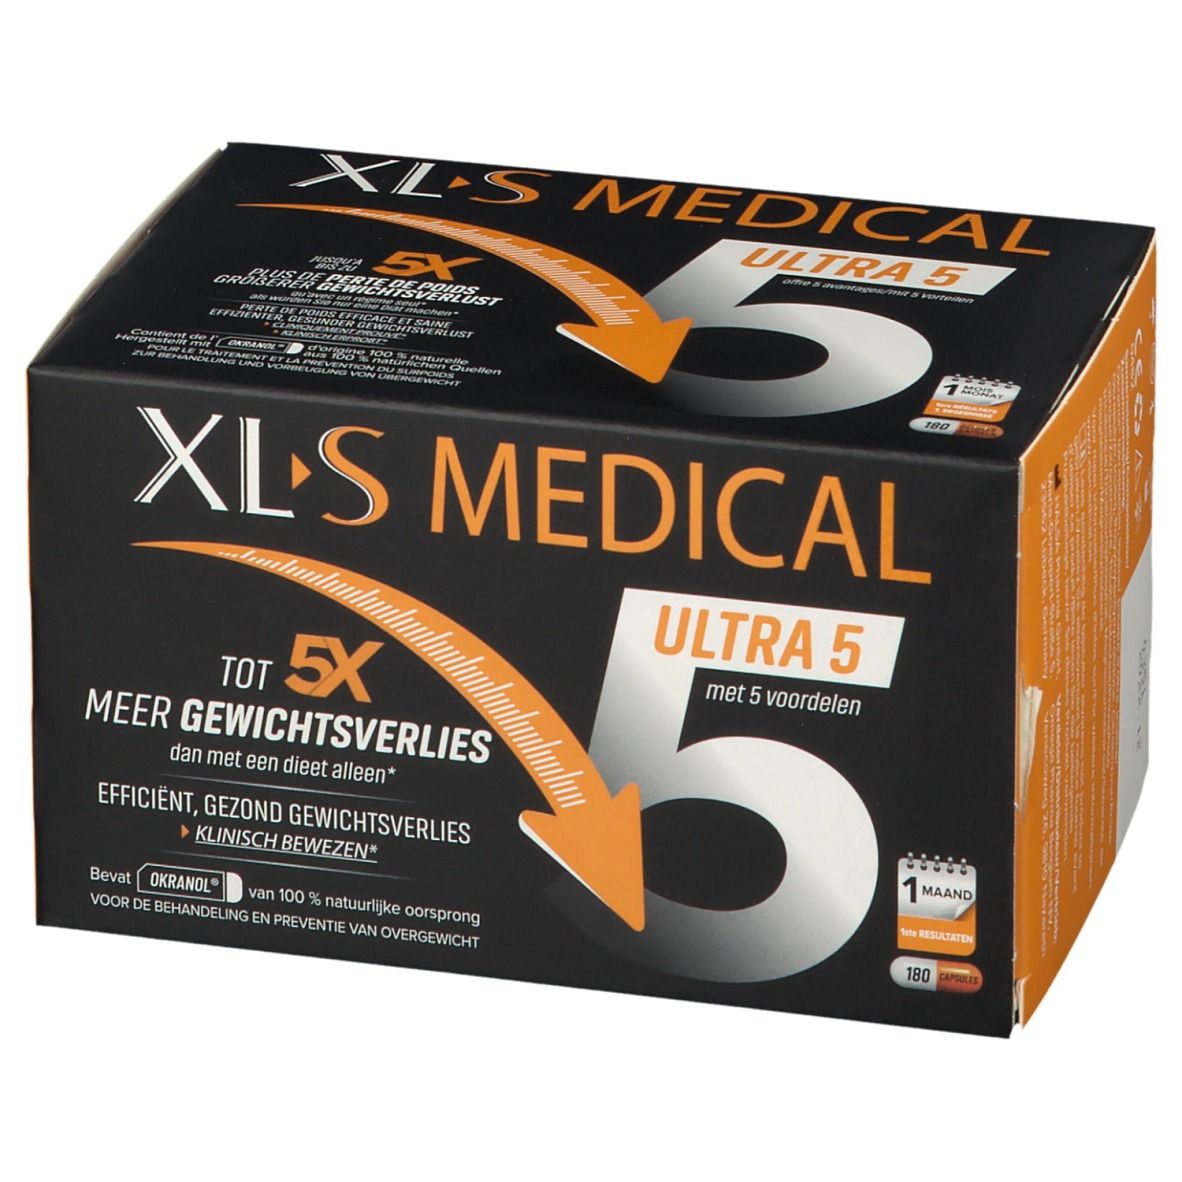 XL-S MEDICAL ULTRA 5